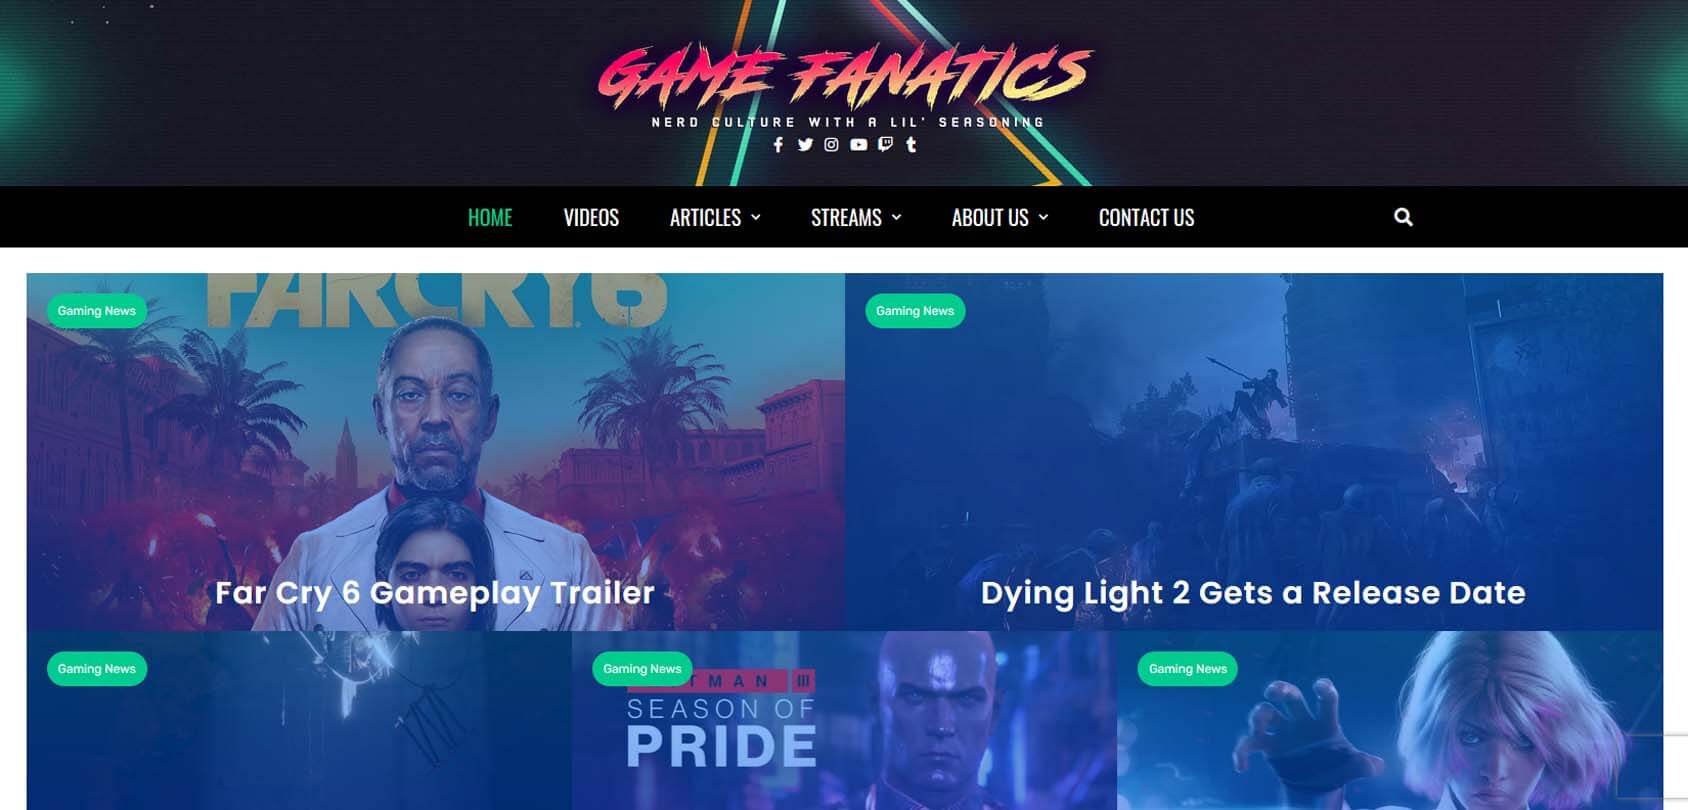 The Game Fanatics Homepage